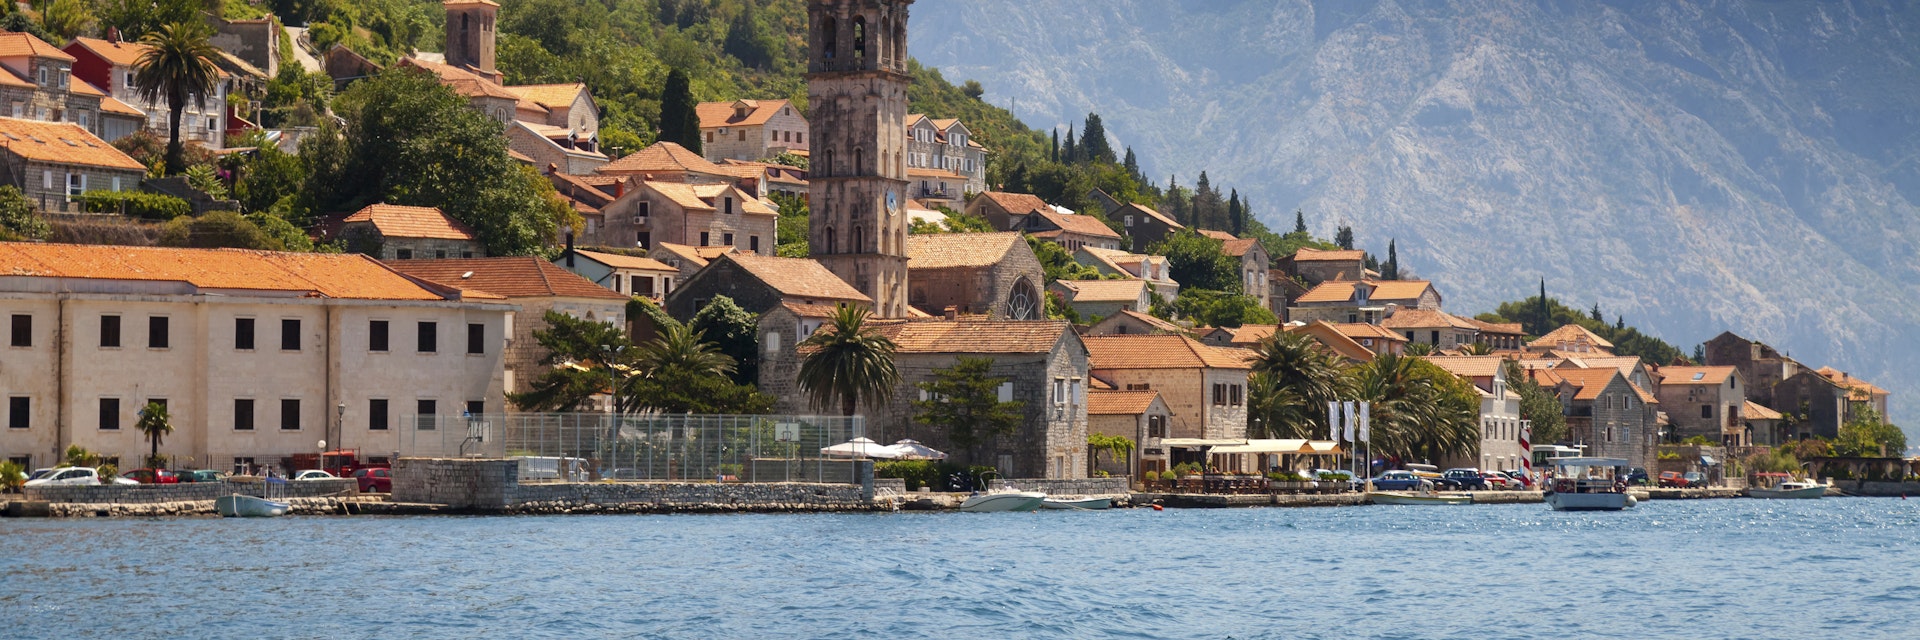 Old town landscape, Perast, Kotor Bay, Montenegro